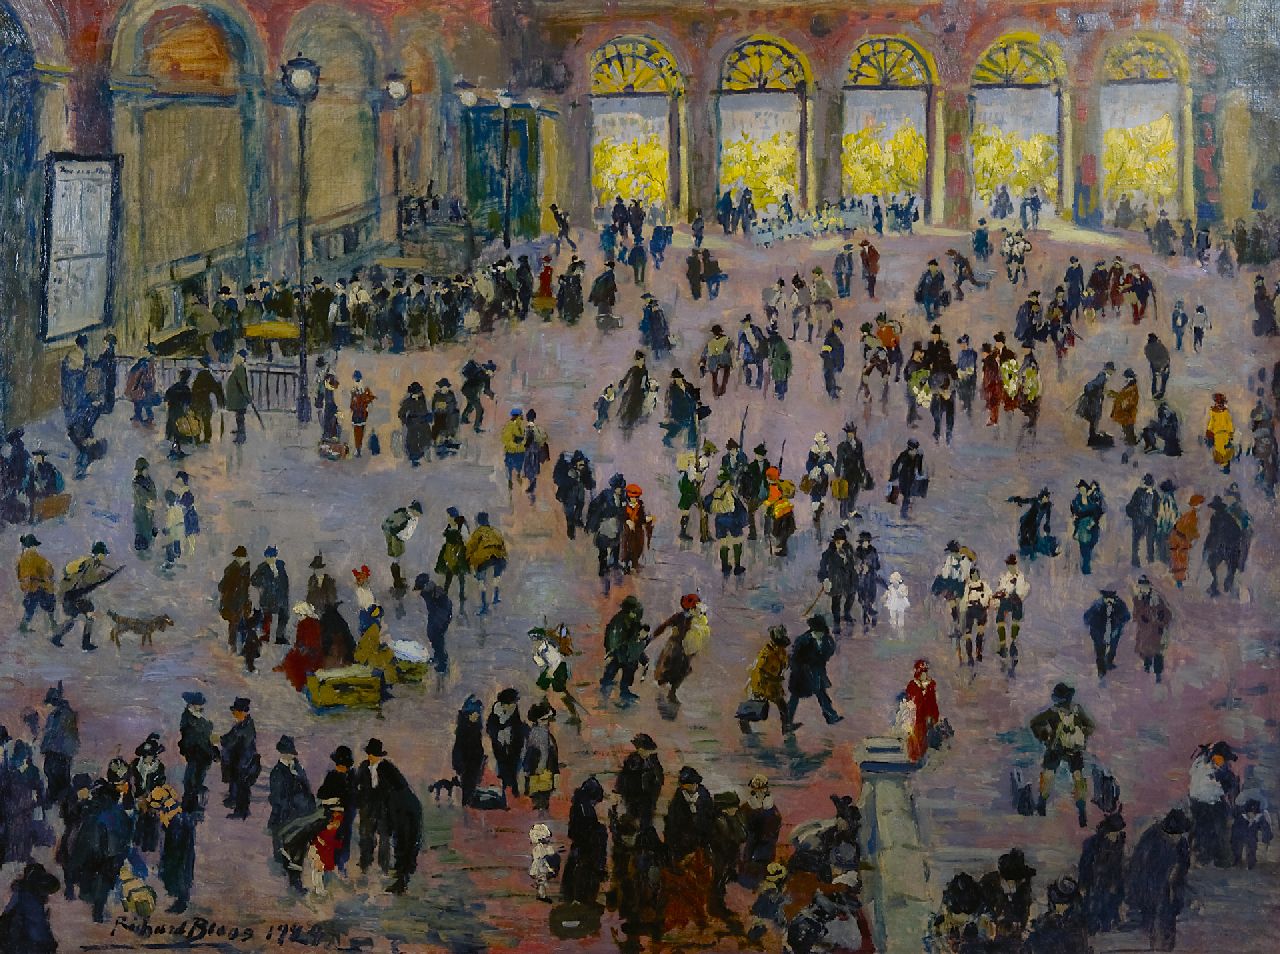 Bloos R.W.  | 'Richard' Willi Bloos, Spitsuur in het Südbahnhof, Wenen, olieverf op doek 90,3 x 118,2 cm, gesigneerd linksonder en gedateerd 1929